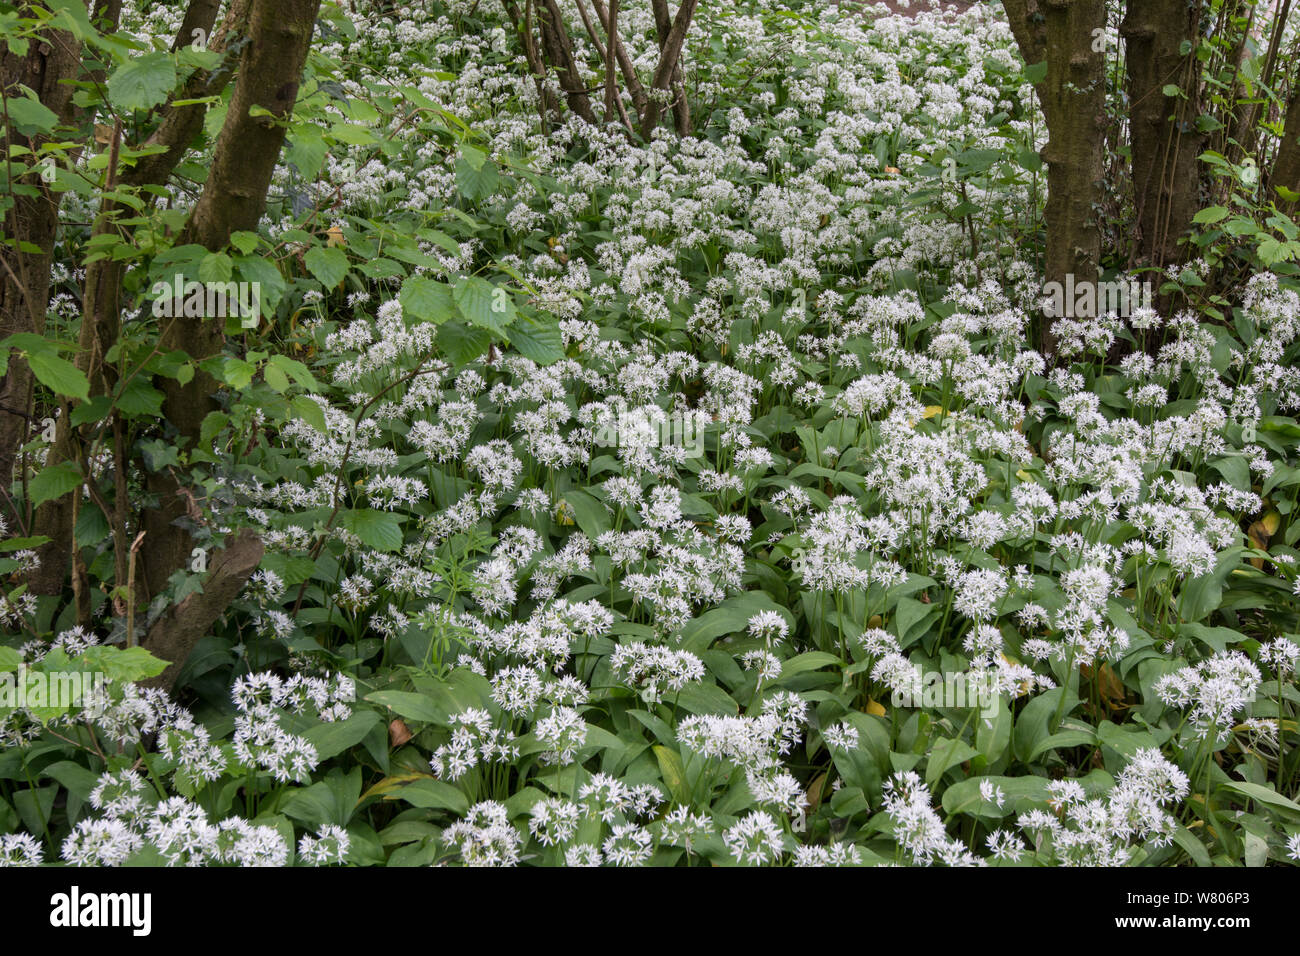 Wild Garlic (Allium ursinum) flowers growing in Hazel coppice woodland, Surrey, England, UK, May. Stock Photo